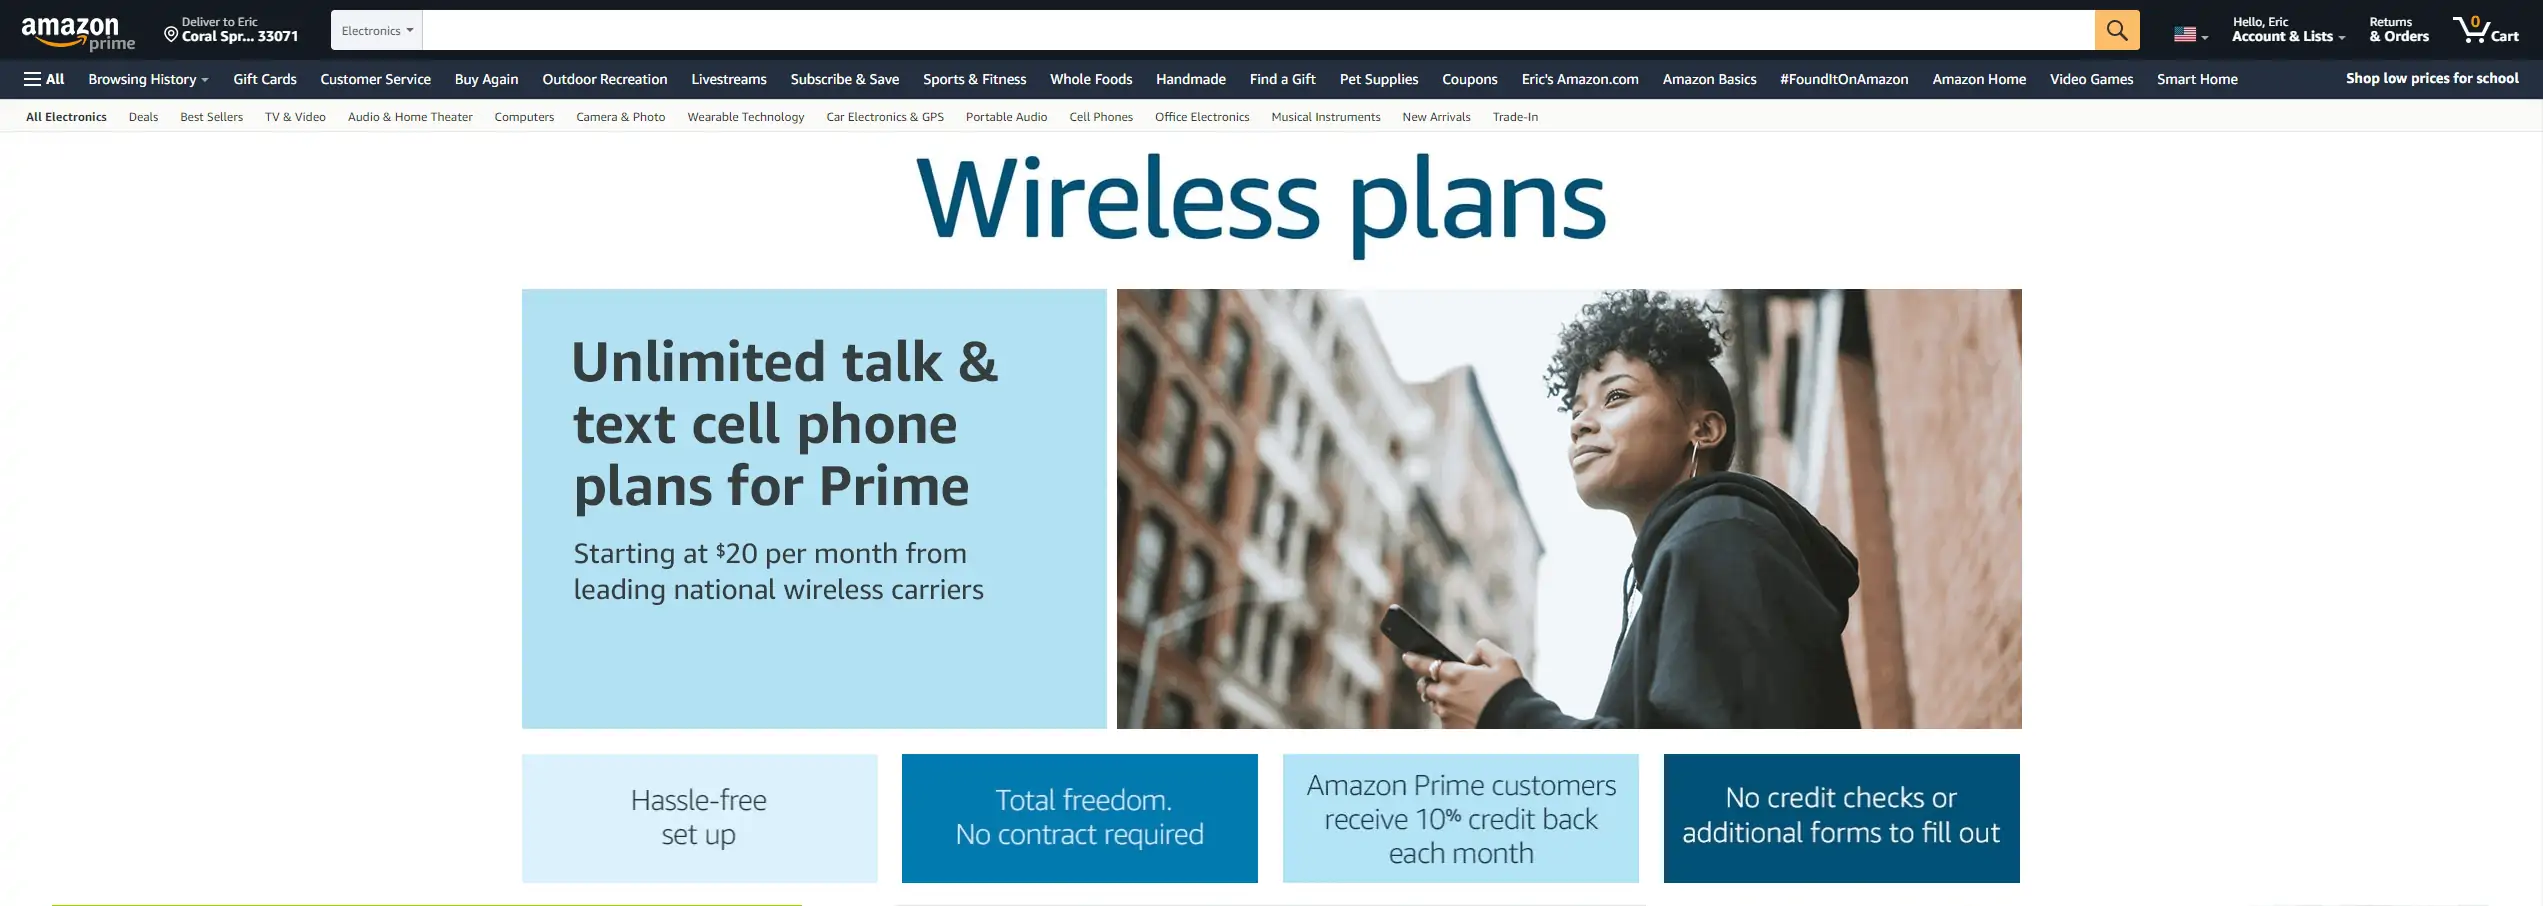 Screenshot of Amazon website showing Amazon Wireless Plans